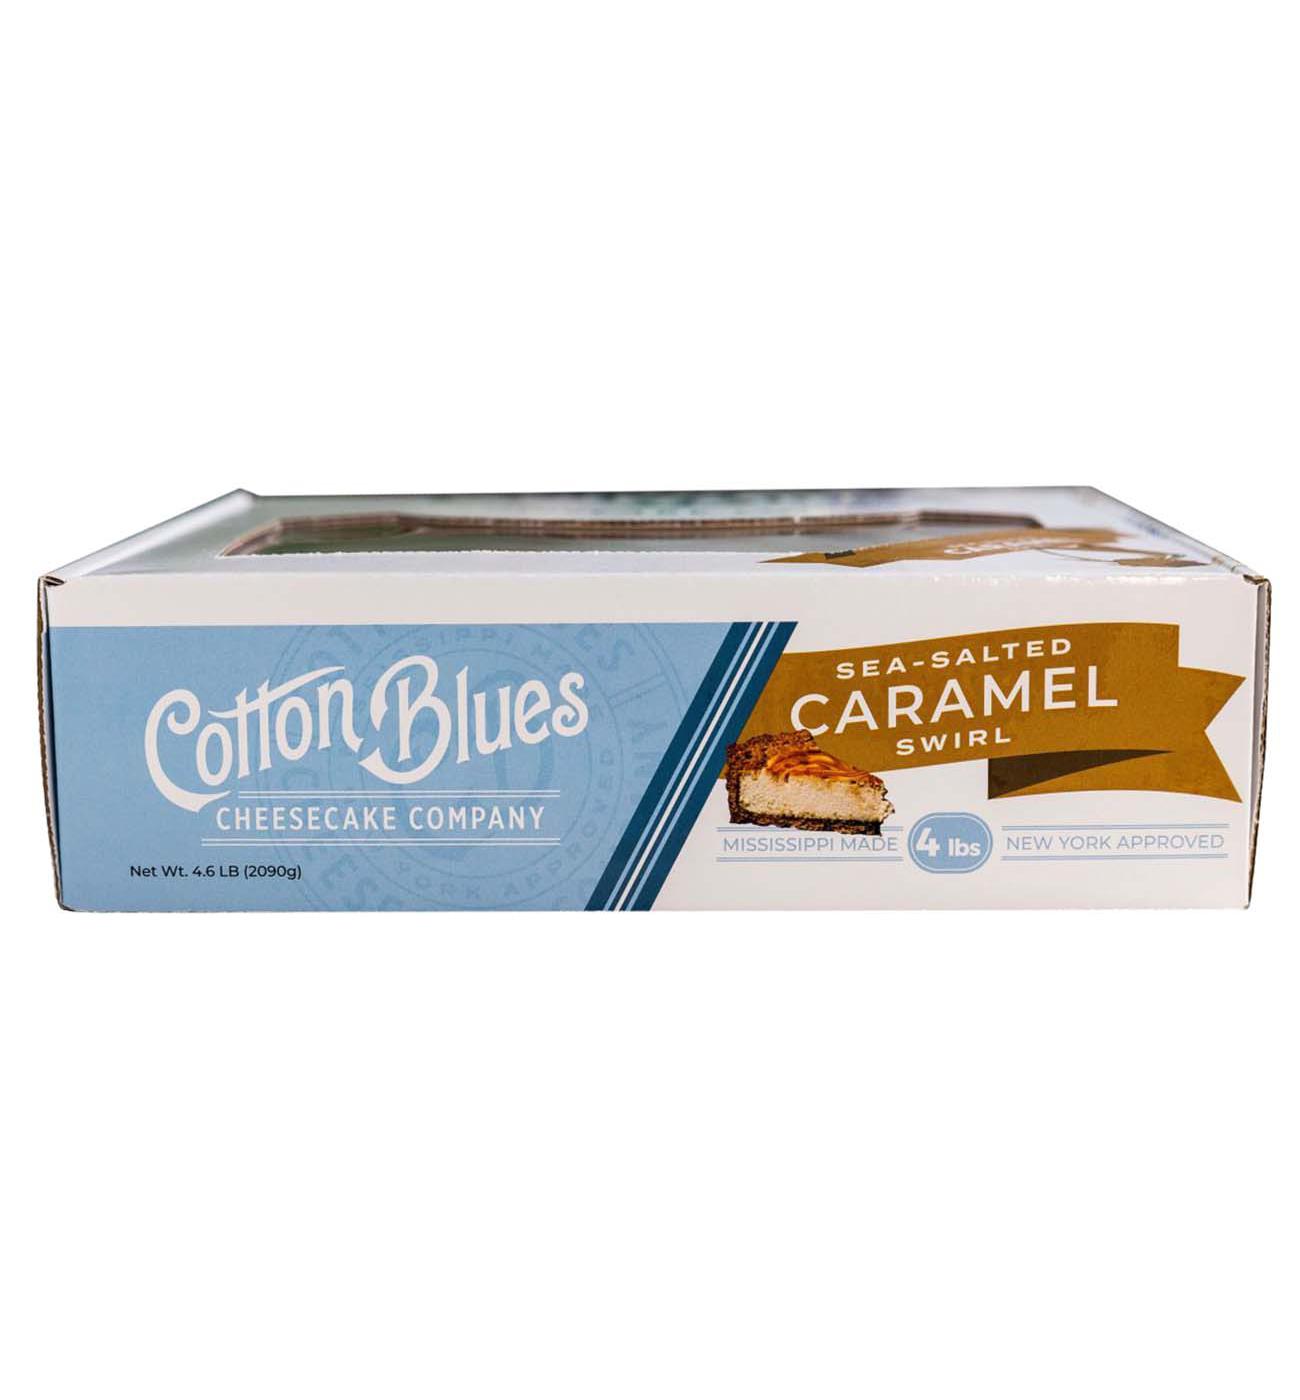 Cotton Blues Cheesecake Company Sea-Salted Caramel Swirl Cheesecake; image 2 of 2